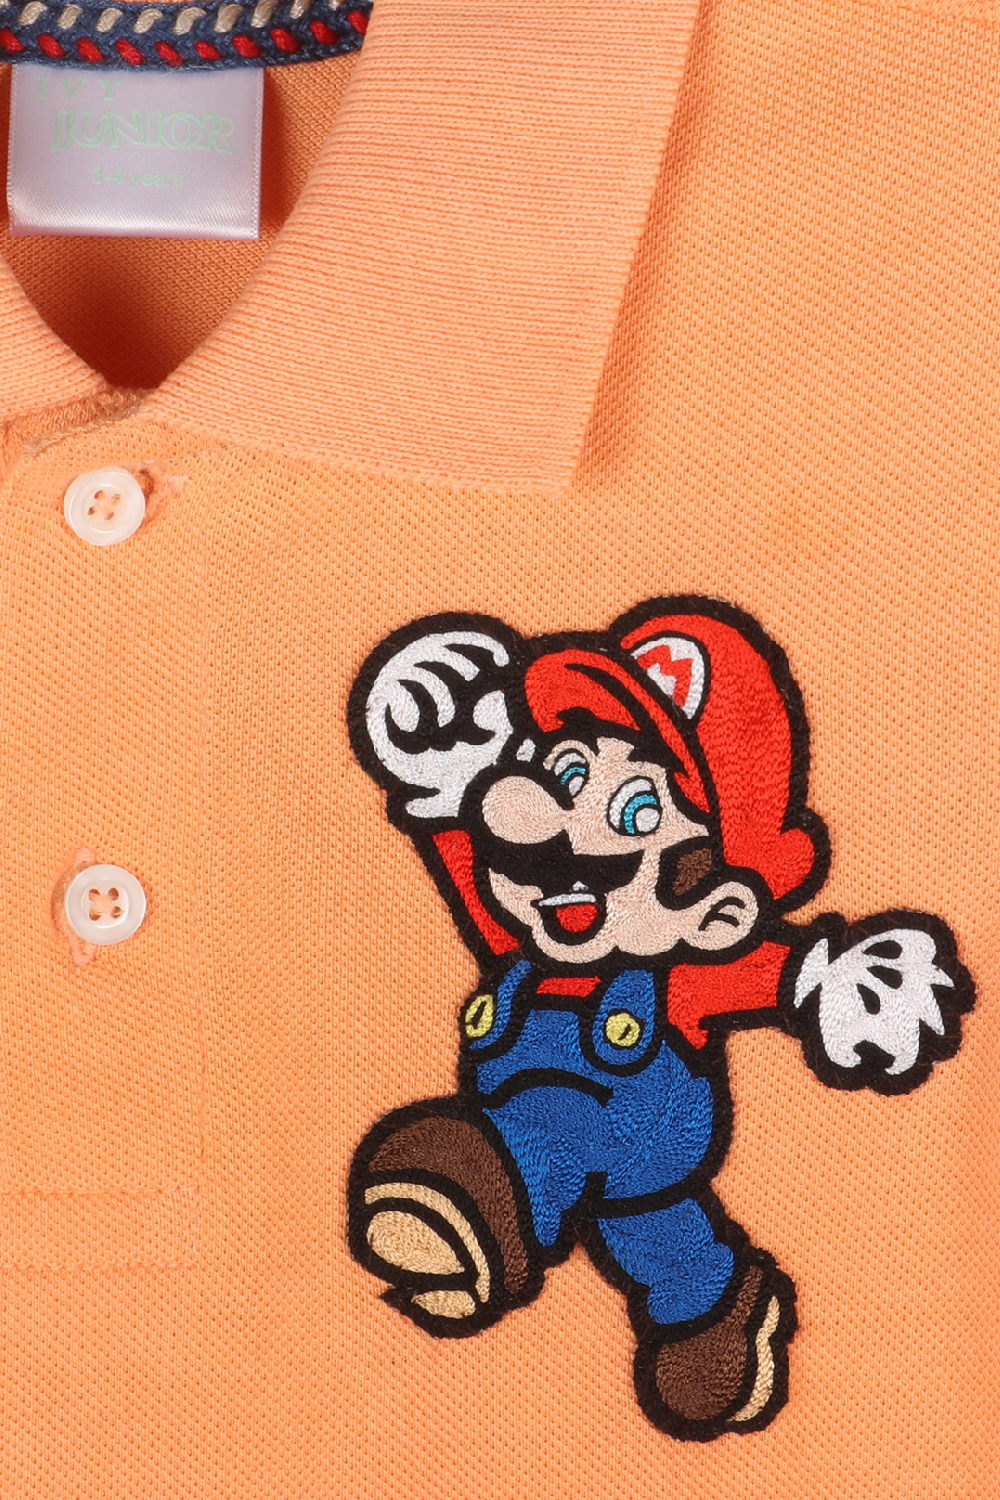 Boy Polo T-Shirt With Mario Bros. Hand Embroidred Motif